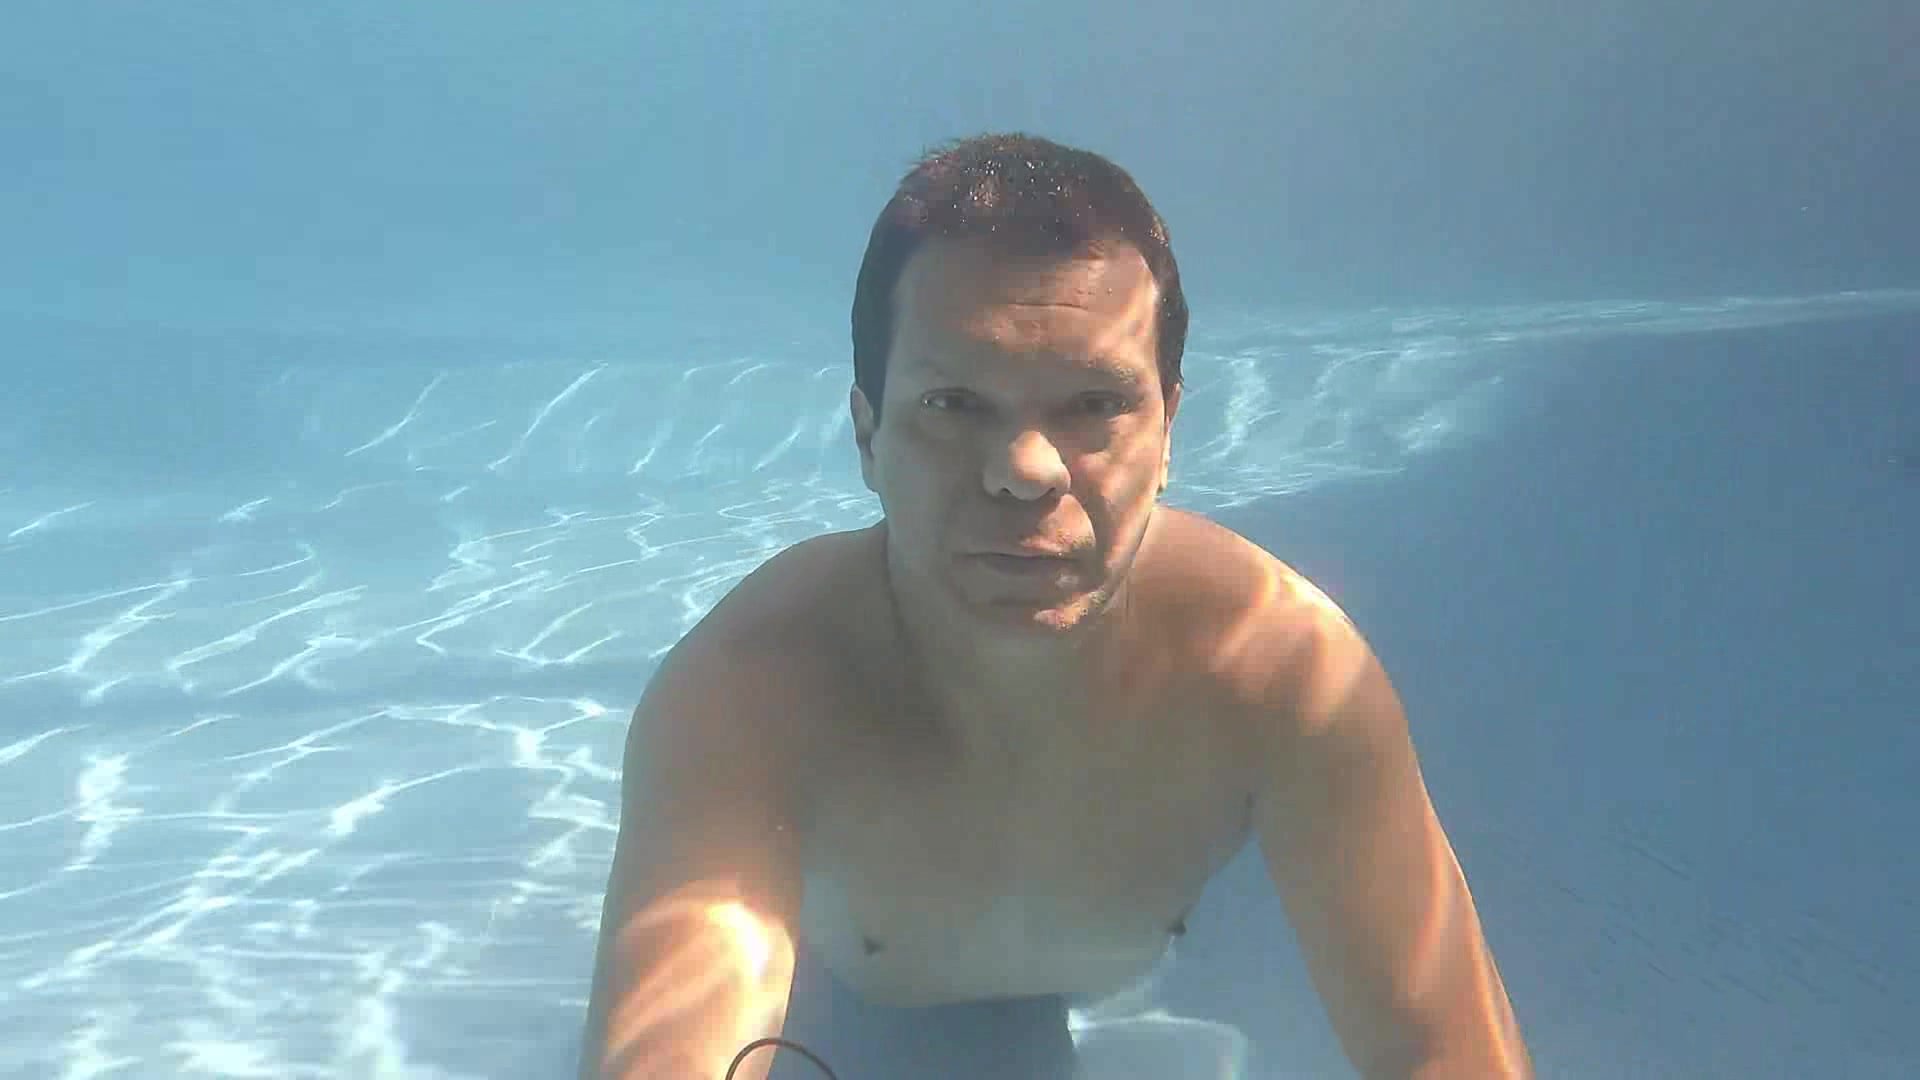 Breatholding barefaced underwater in pool - video 3